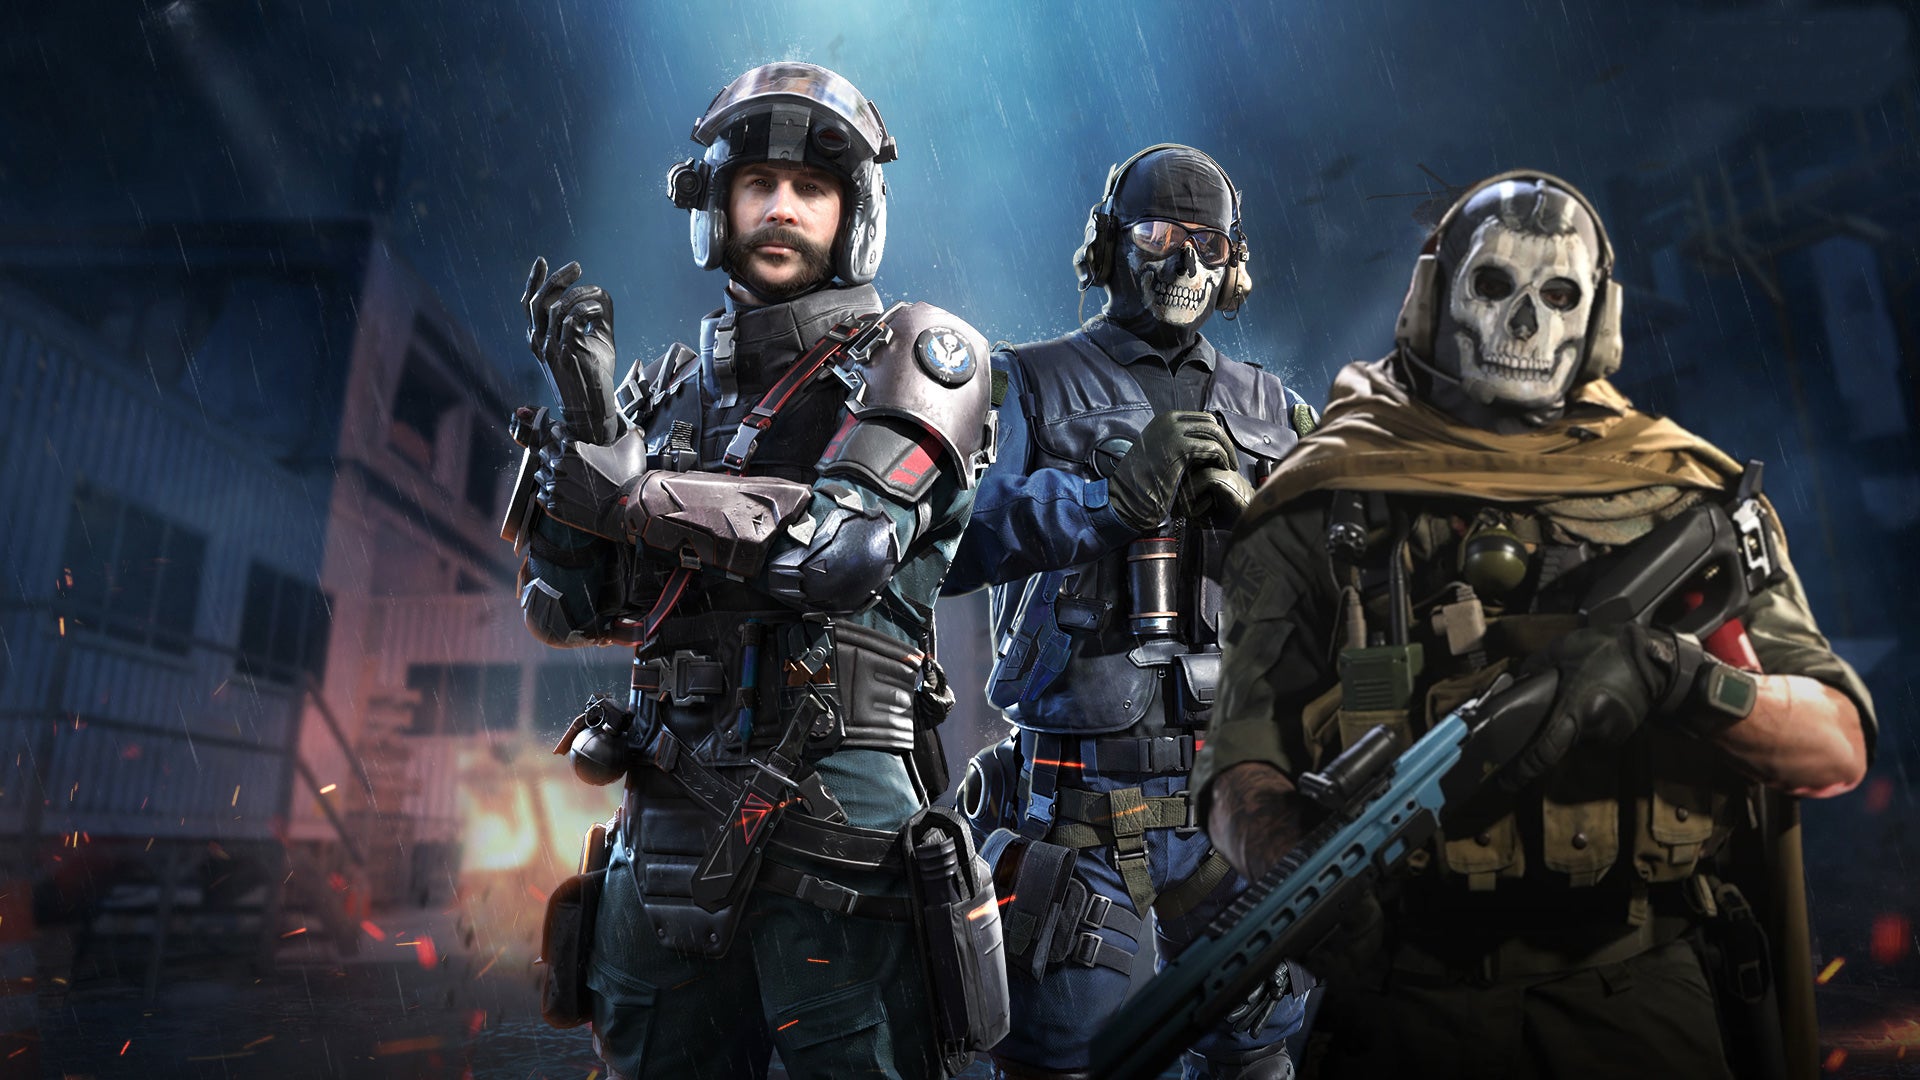 Bilder zu Call of Duty: Warzone Mobile besitzt schon jetzt Accounts in den sozialen Medien